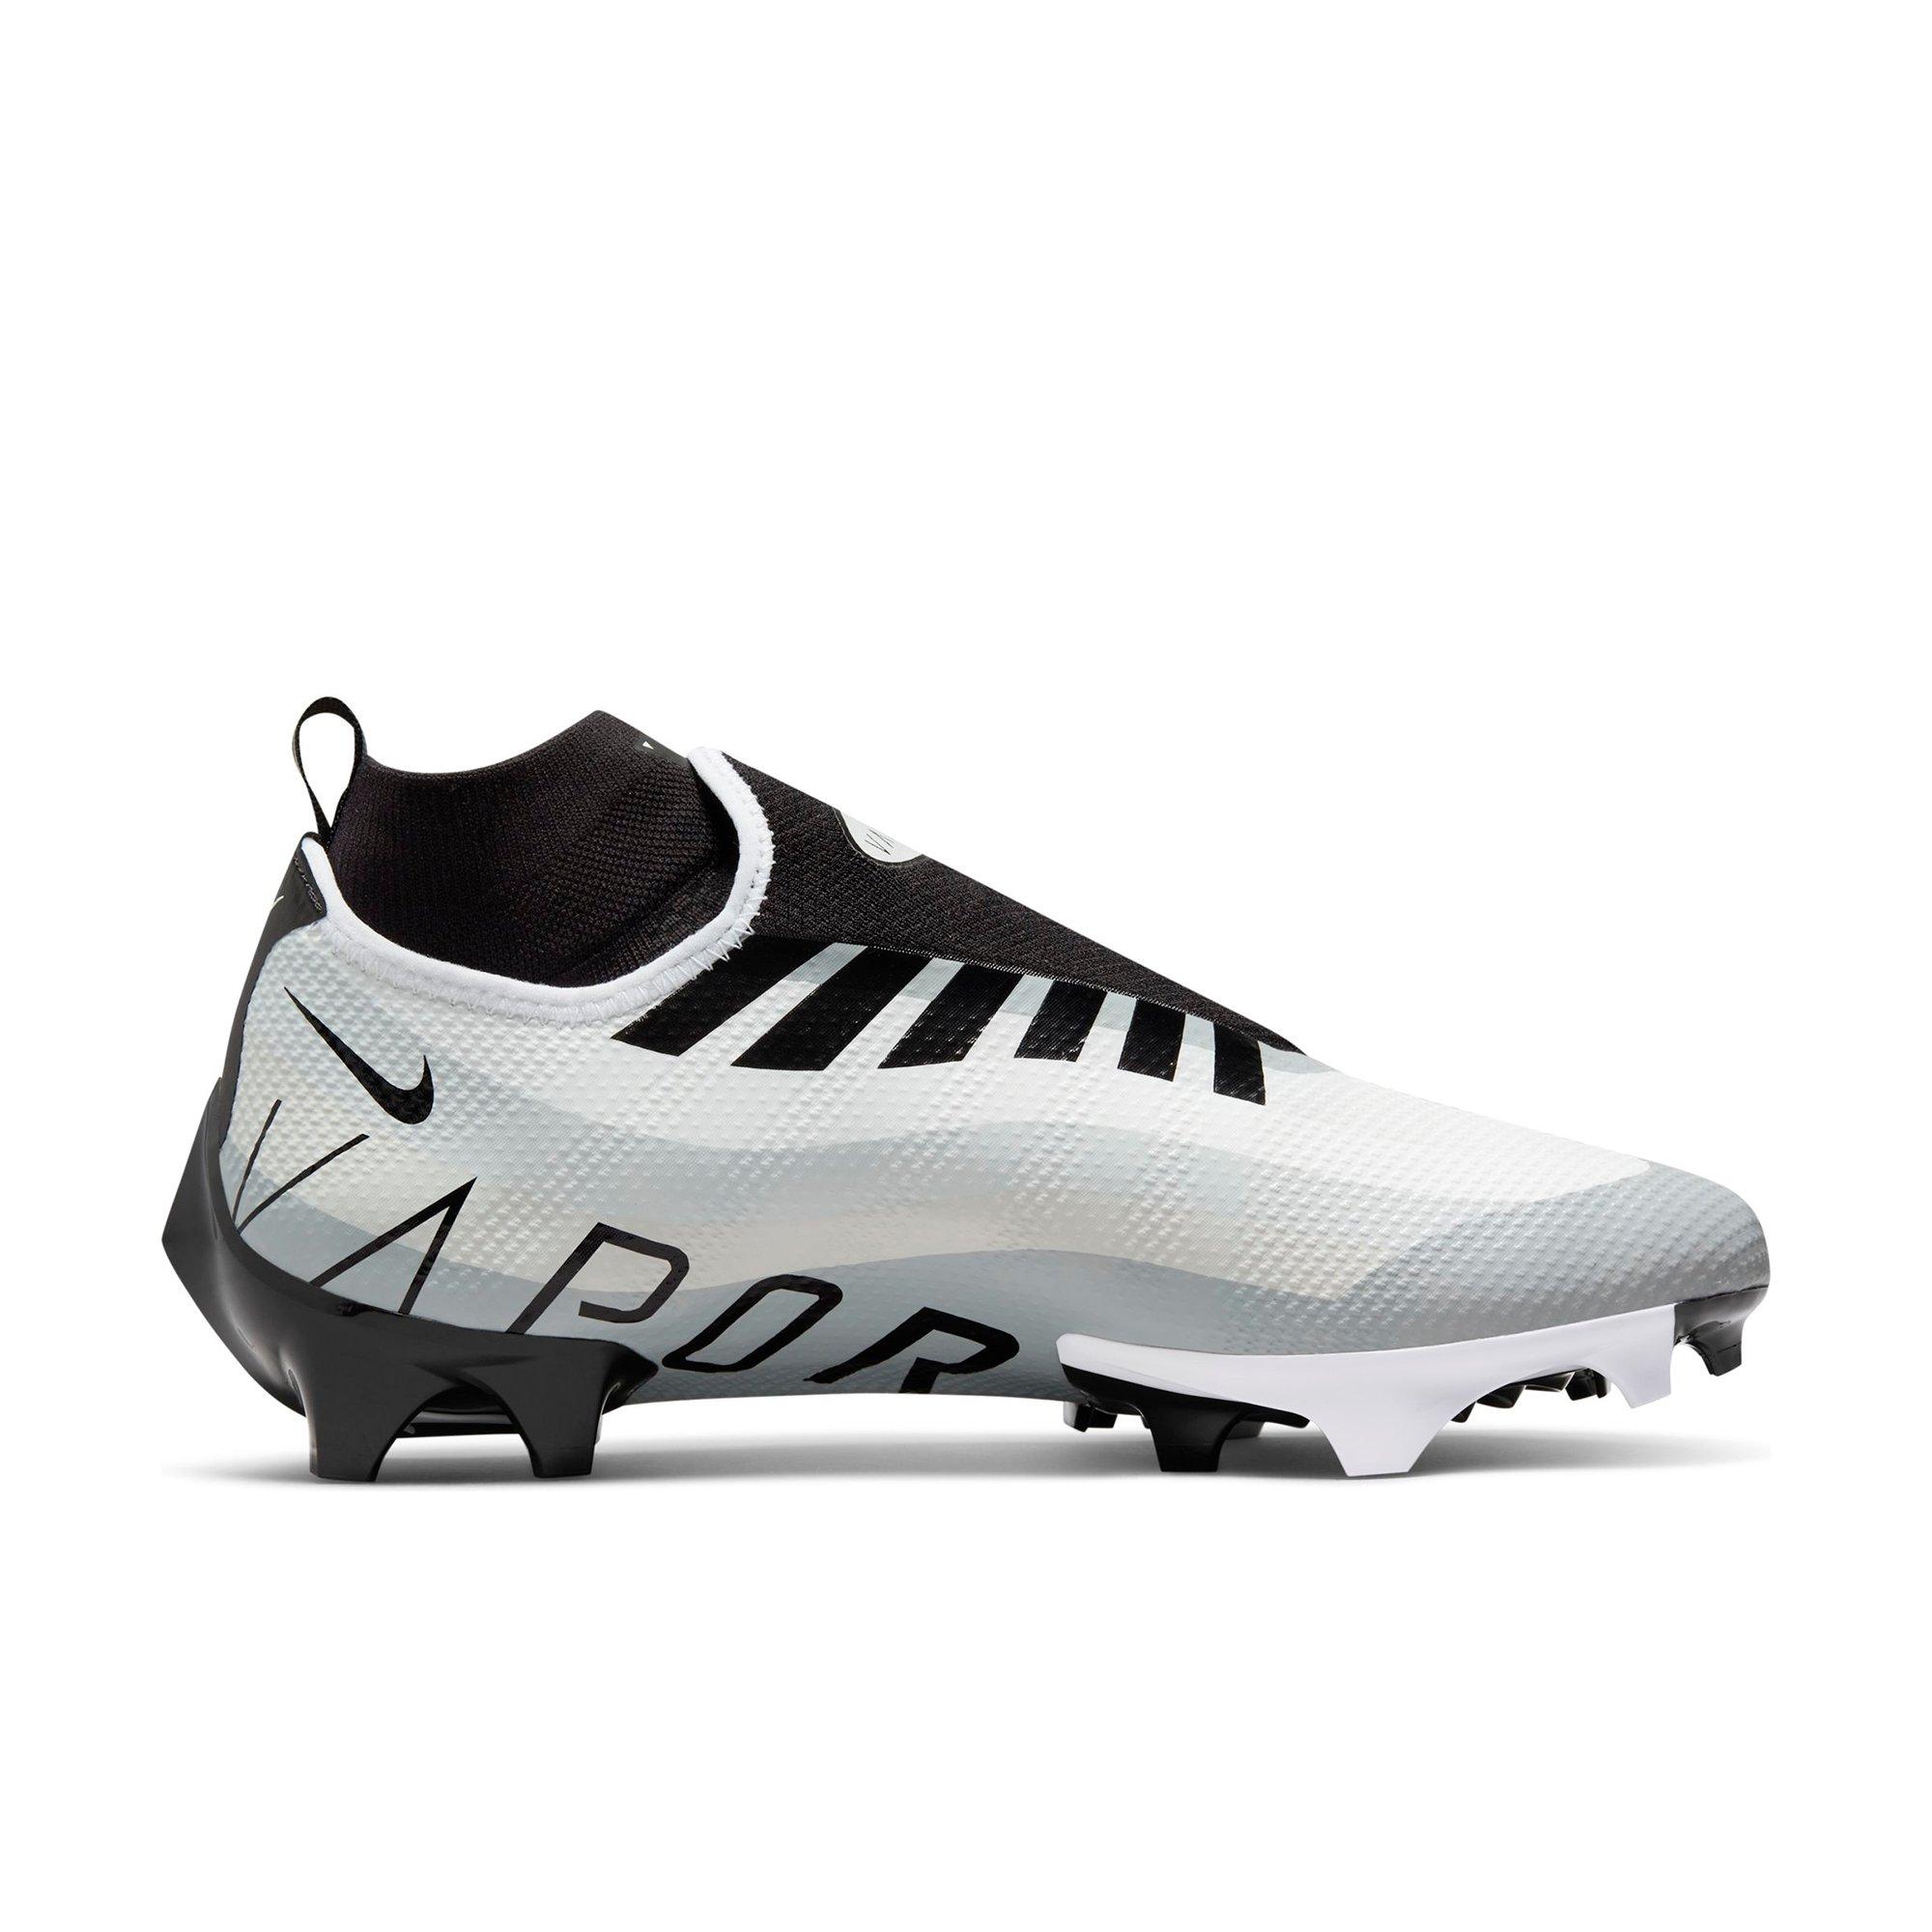 Intrusión ellos fábrica Nike Vapor Edge Pro 360 "White/Black/Pure Platinum" Men's Football Cleat